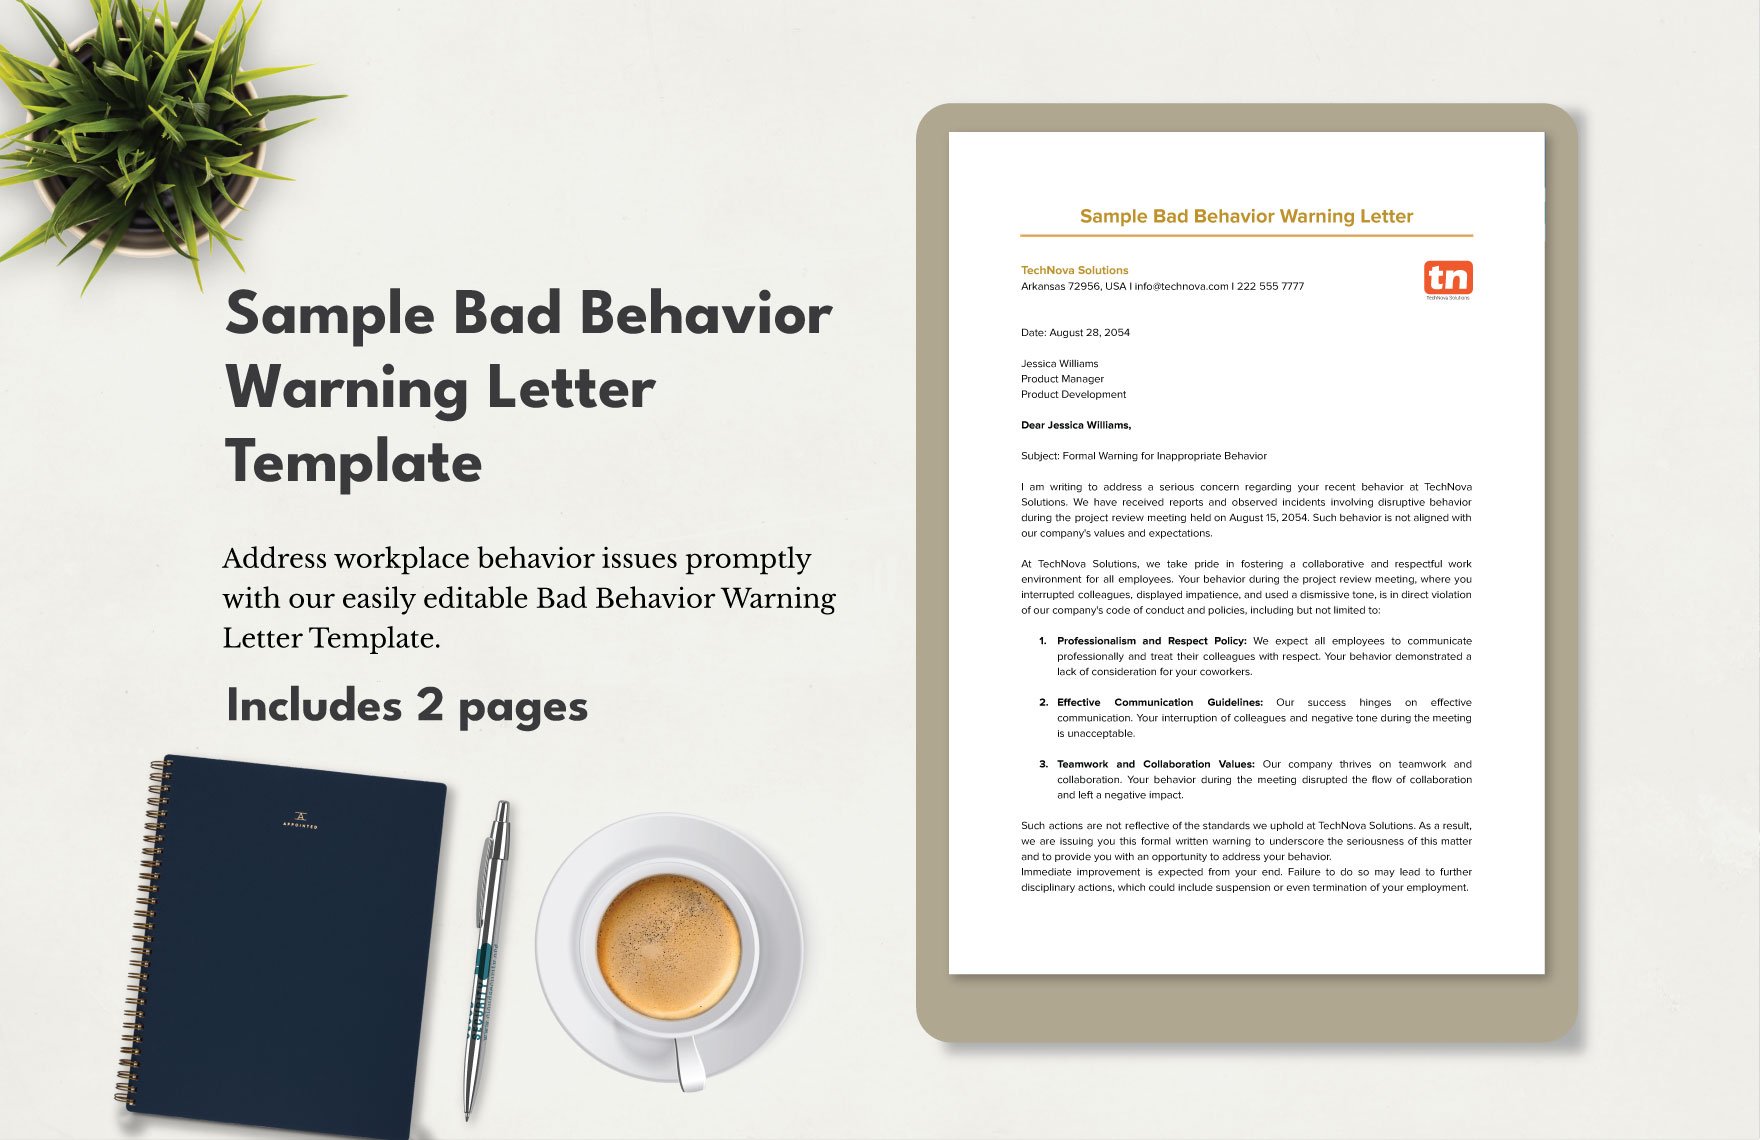 Sample Bad Behavior Warning Letter Template